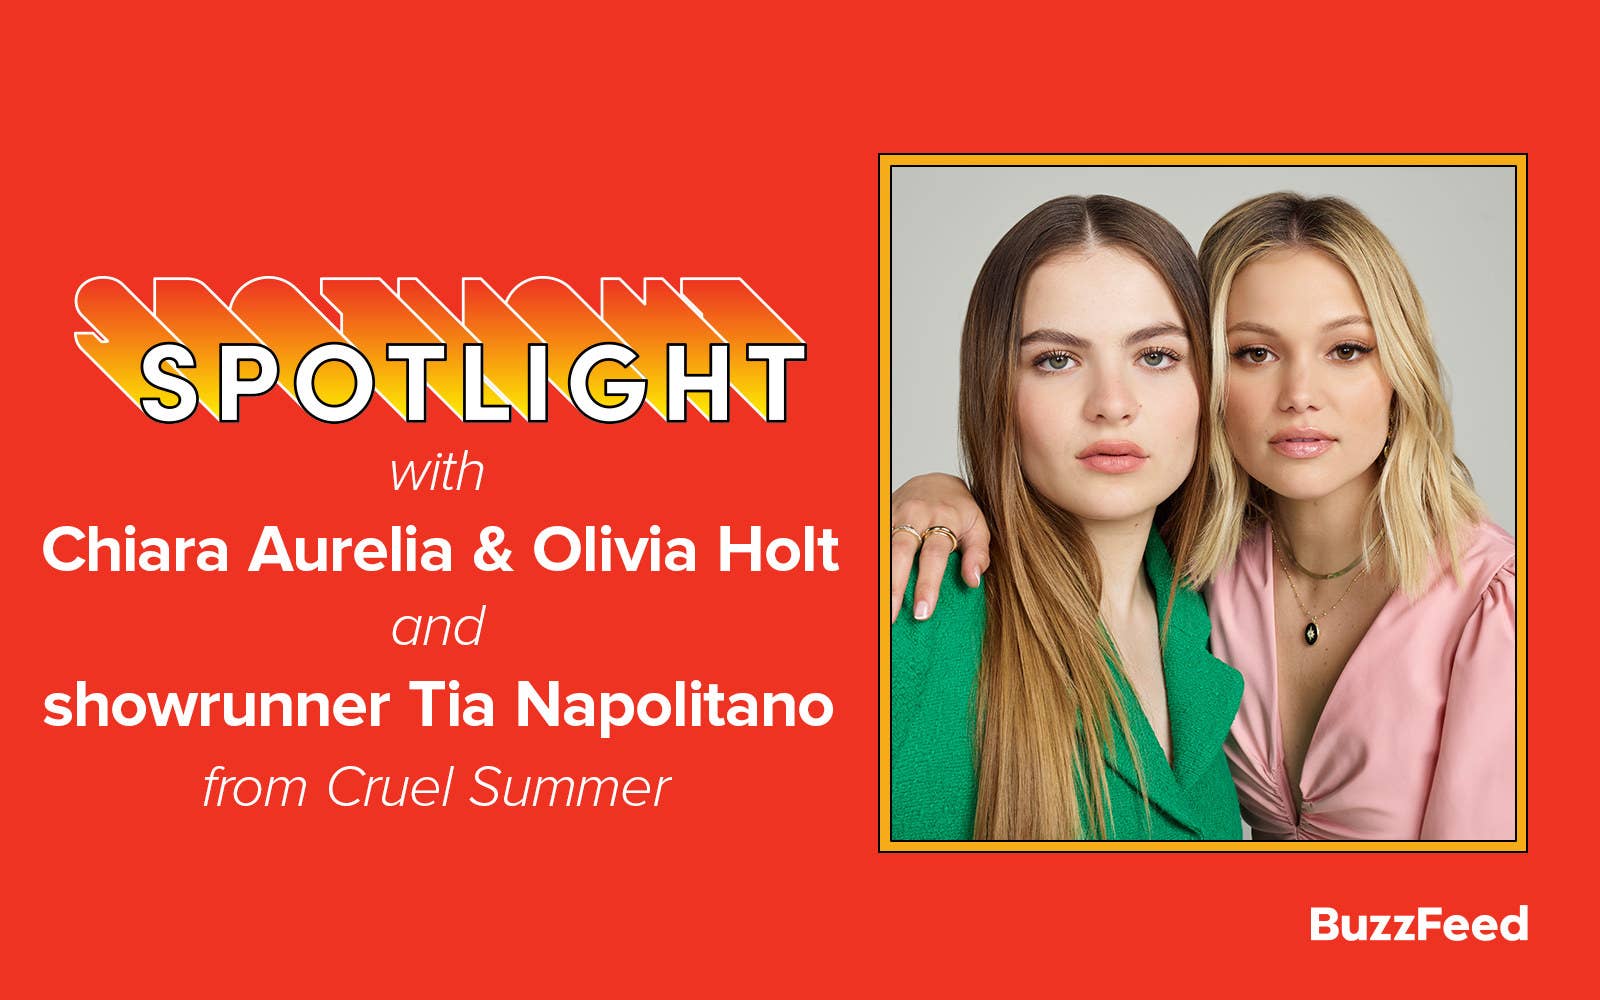 A header reading: &quot;Spotlight with Chiara Aurelia &amp; Olivia Holt and showrunner Tia Napolitano from Cruel Summer&quot;